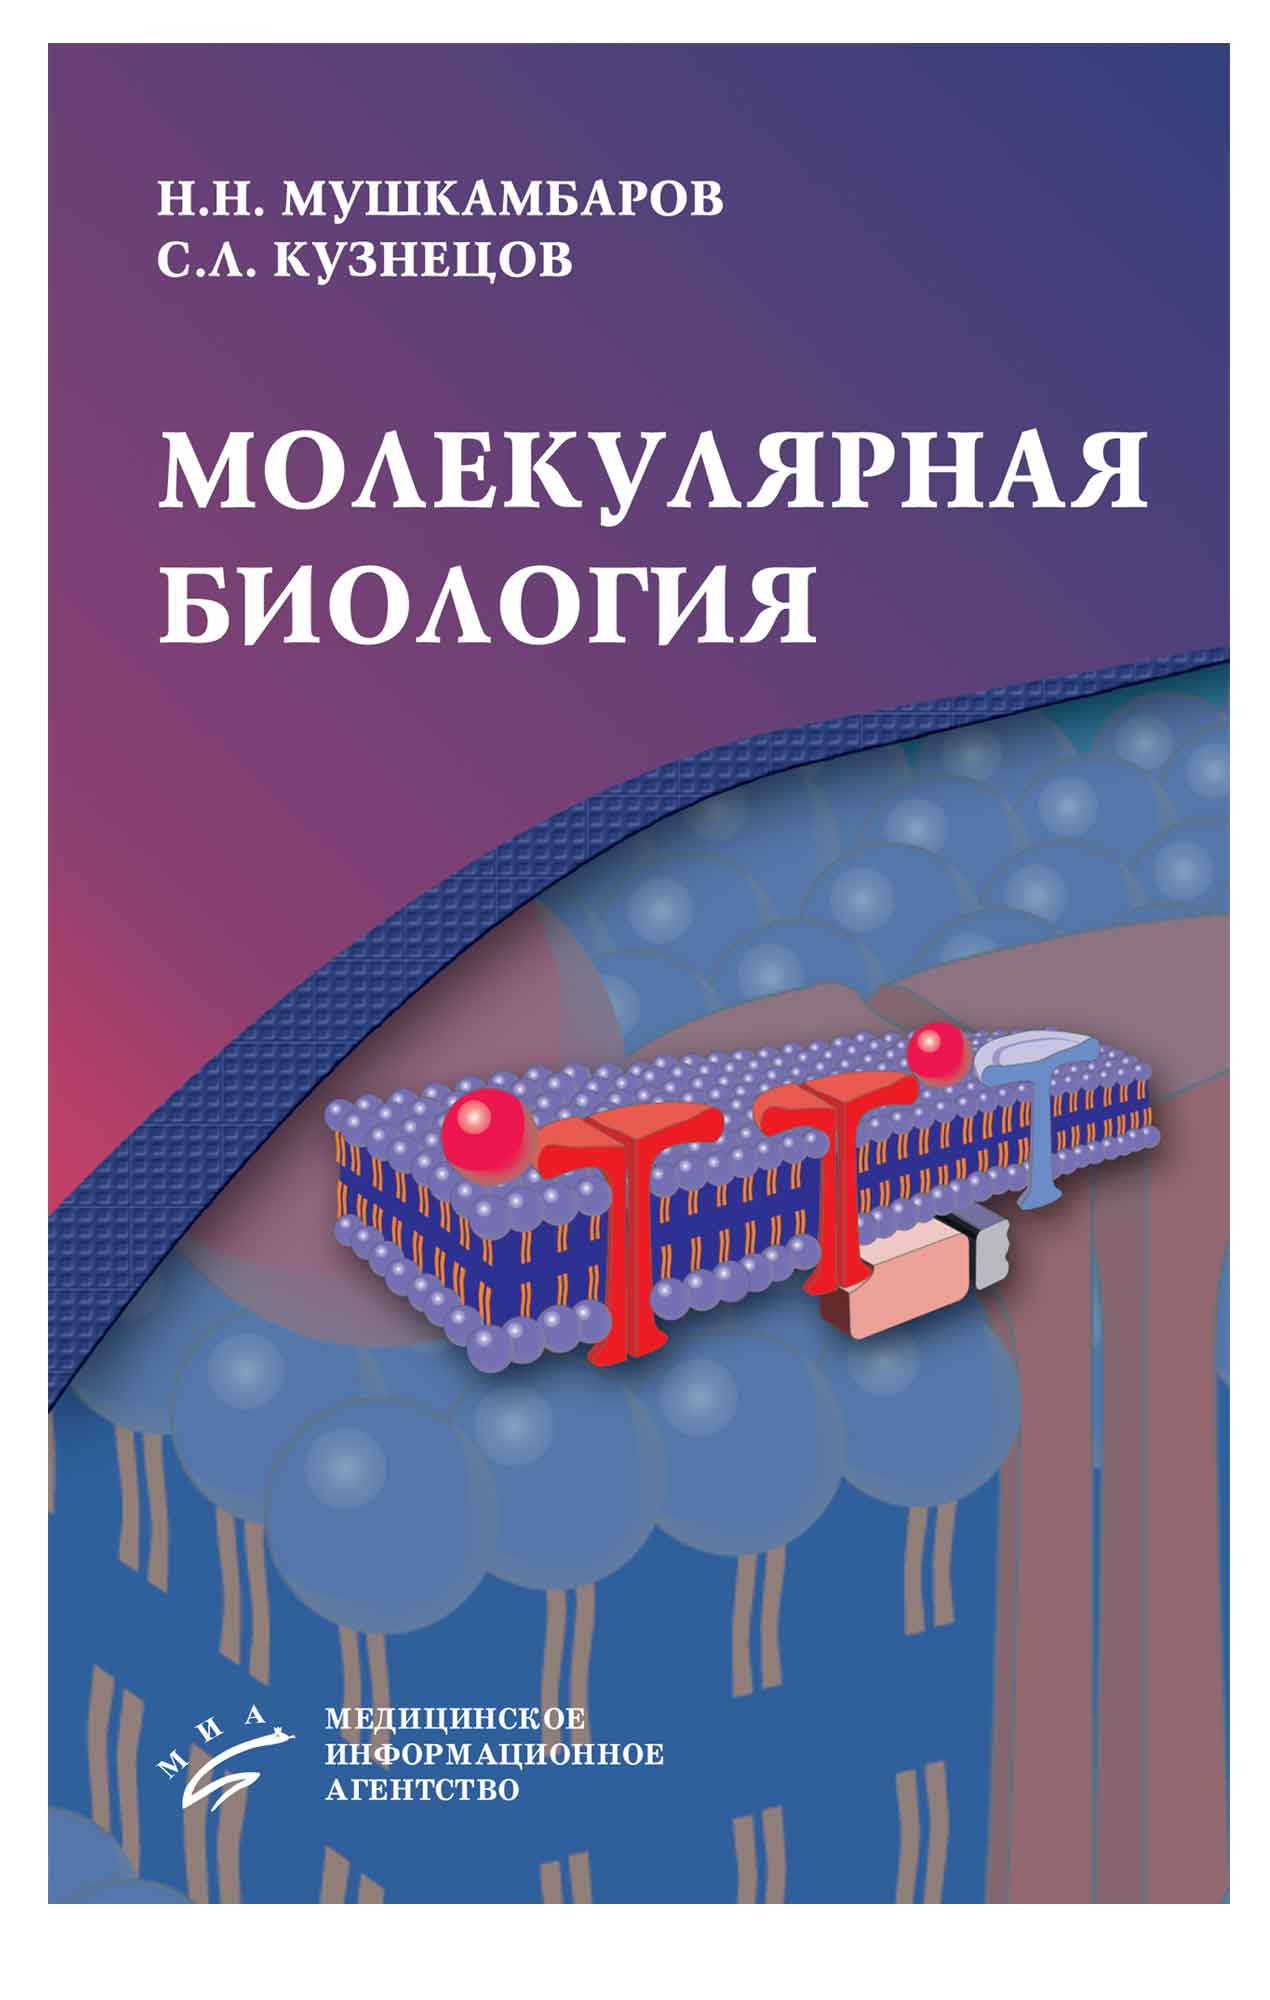 Кузнецов С.Л., Мушкамбаров Н.Н. Молекулярная биология. 2-е изд., доп. и перераб 